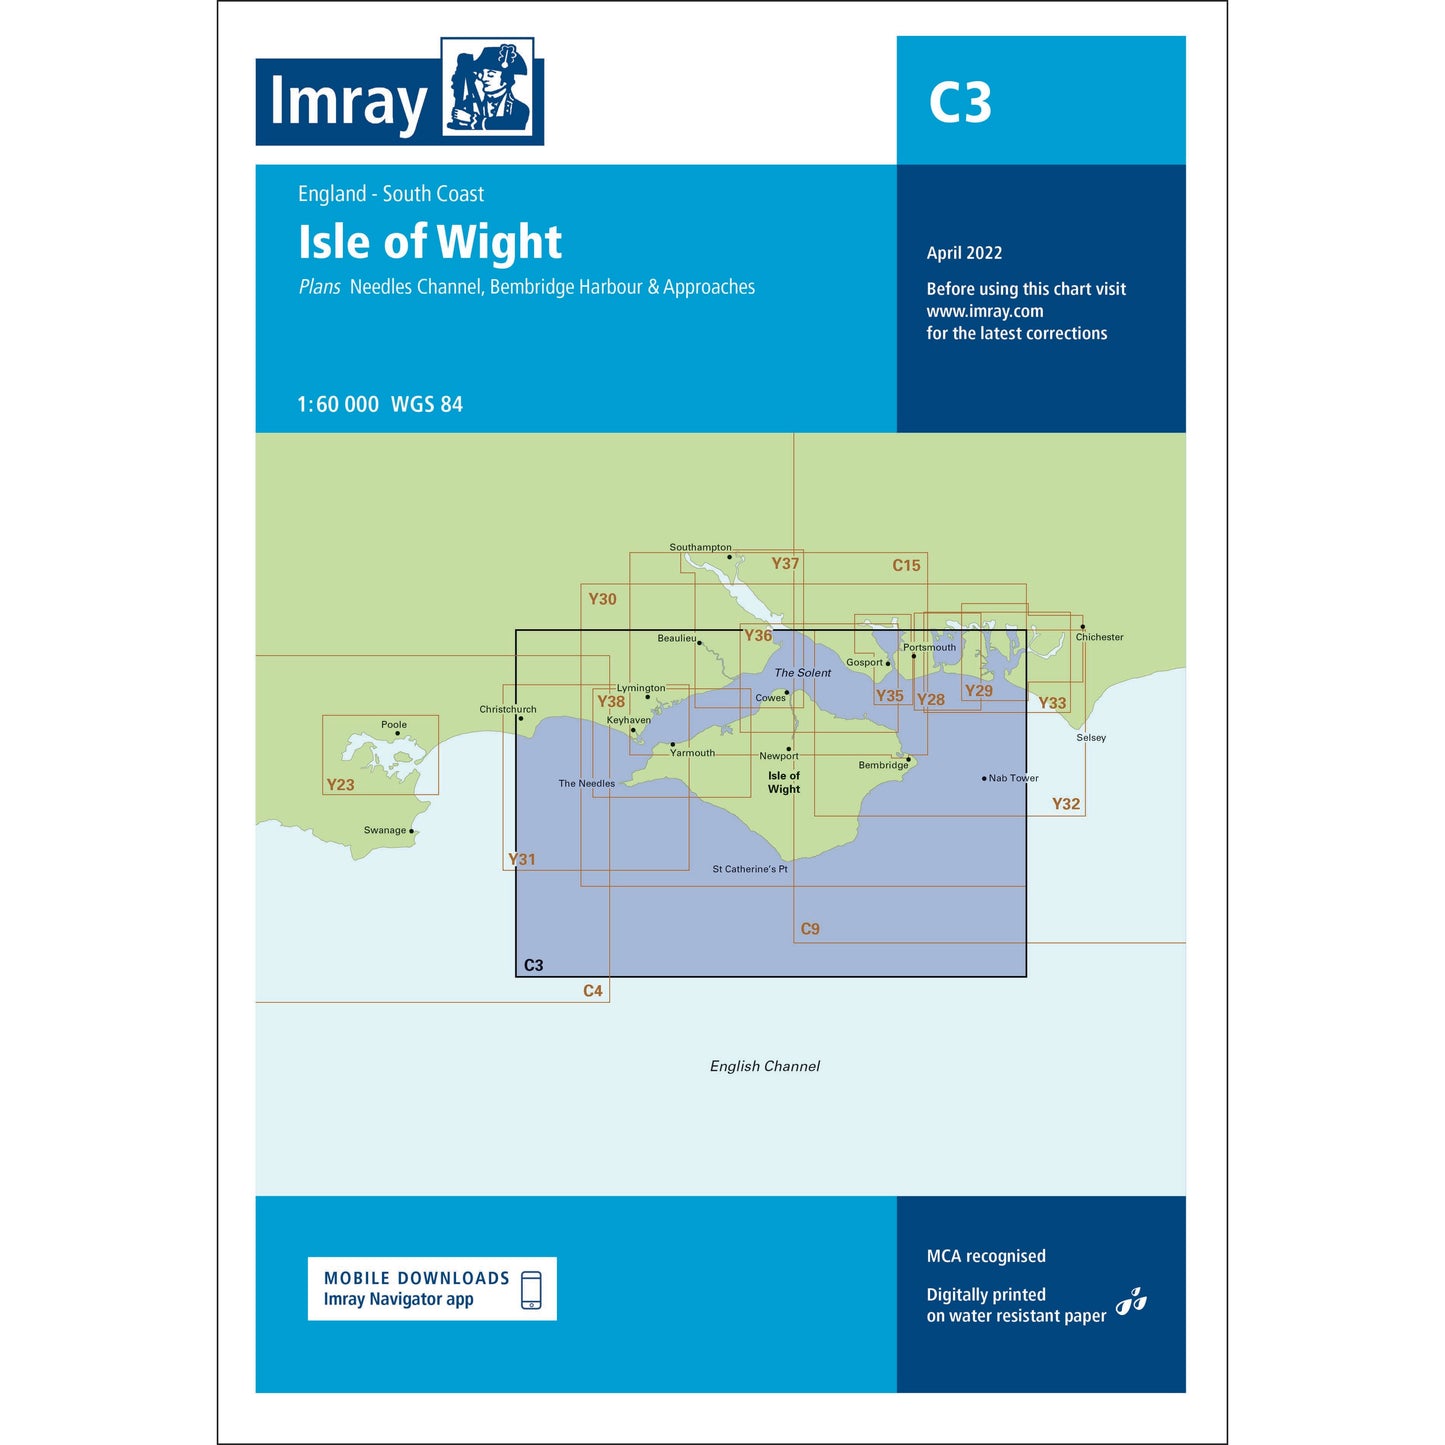 CARTE IMRAY C3 ISLE OF WIGHT